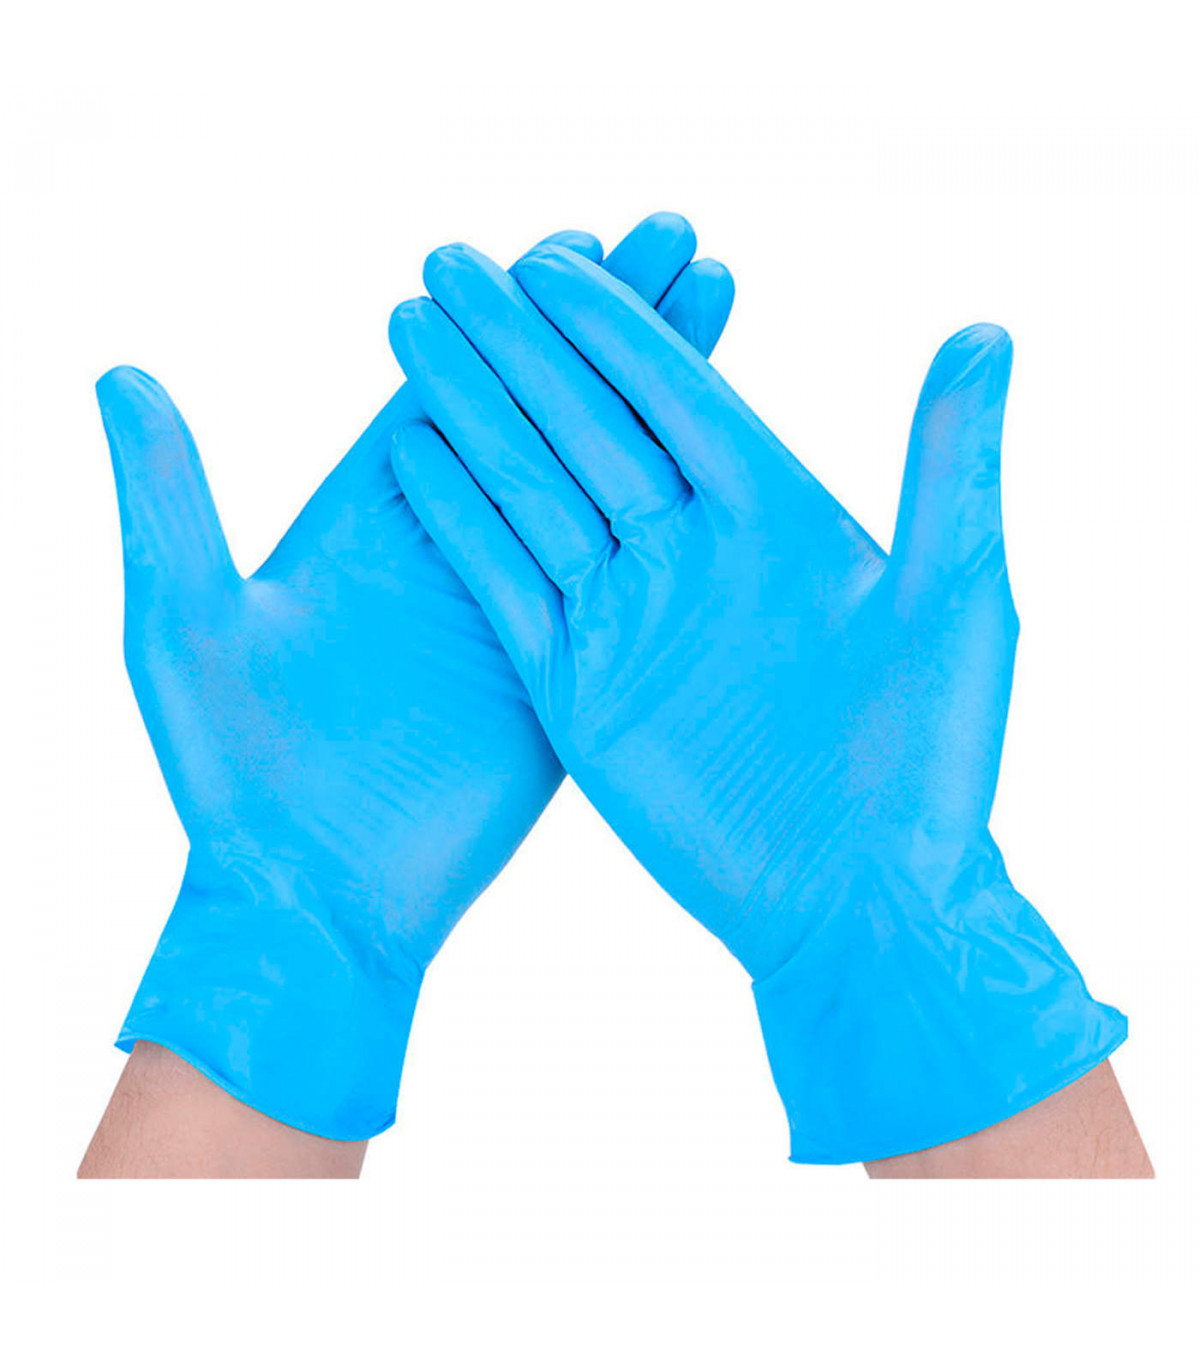 Guantes desechables de nitrilo, 6 mil, guantes desechables azules  resistentes, guantes de cocina, guantes mecánicos, sin látex, sin polvo